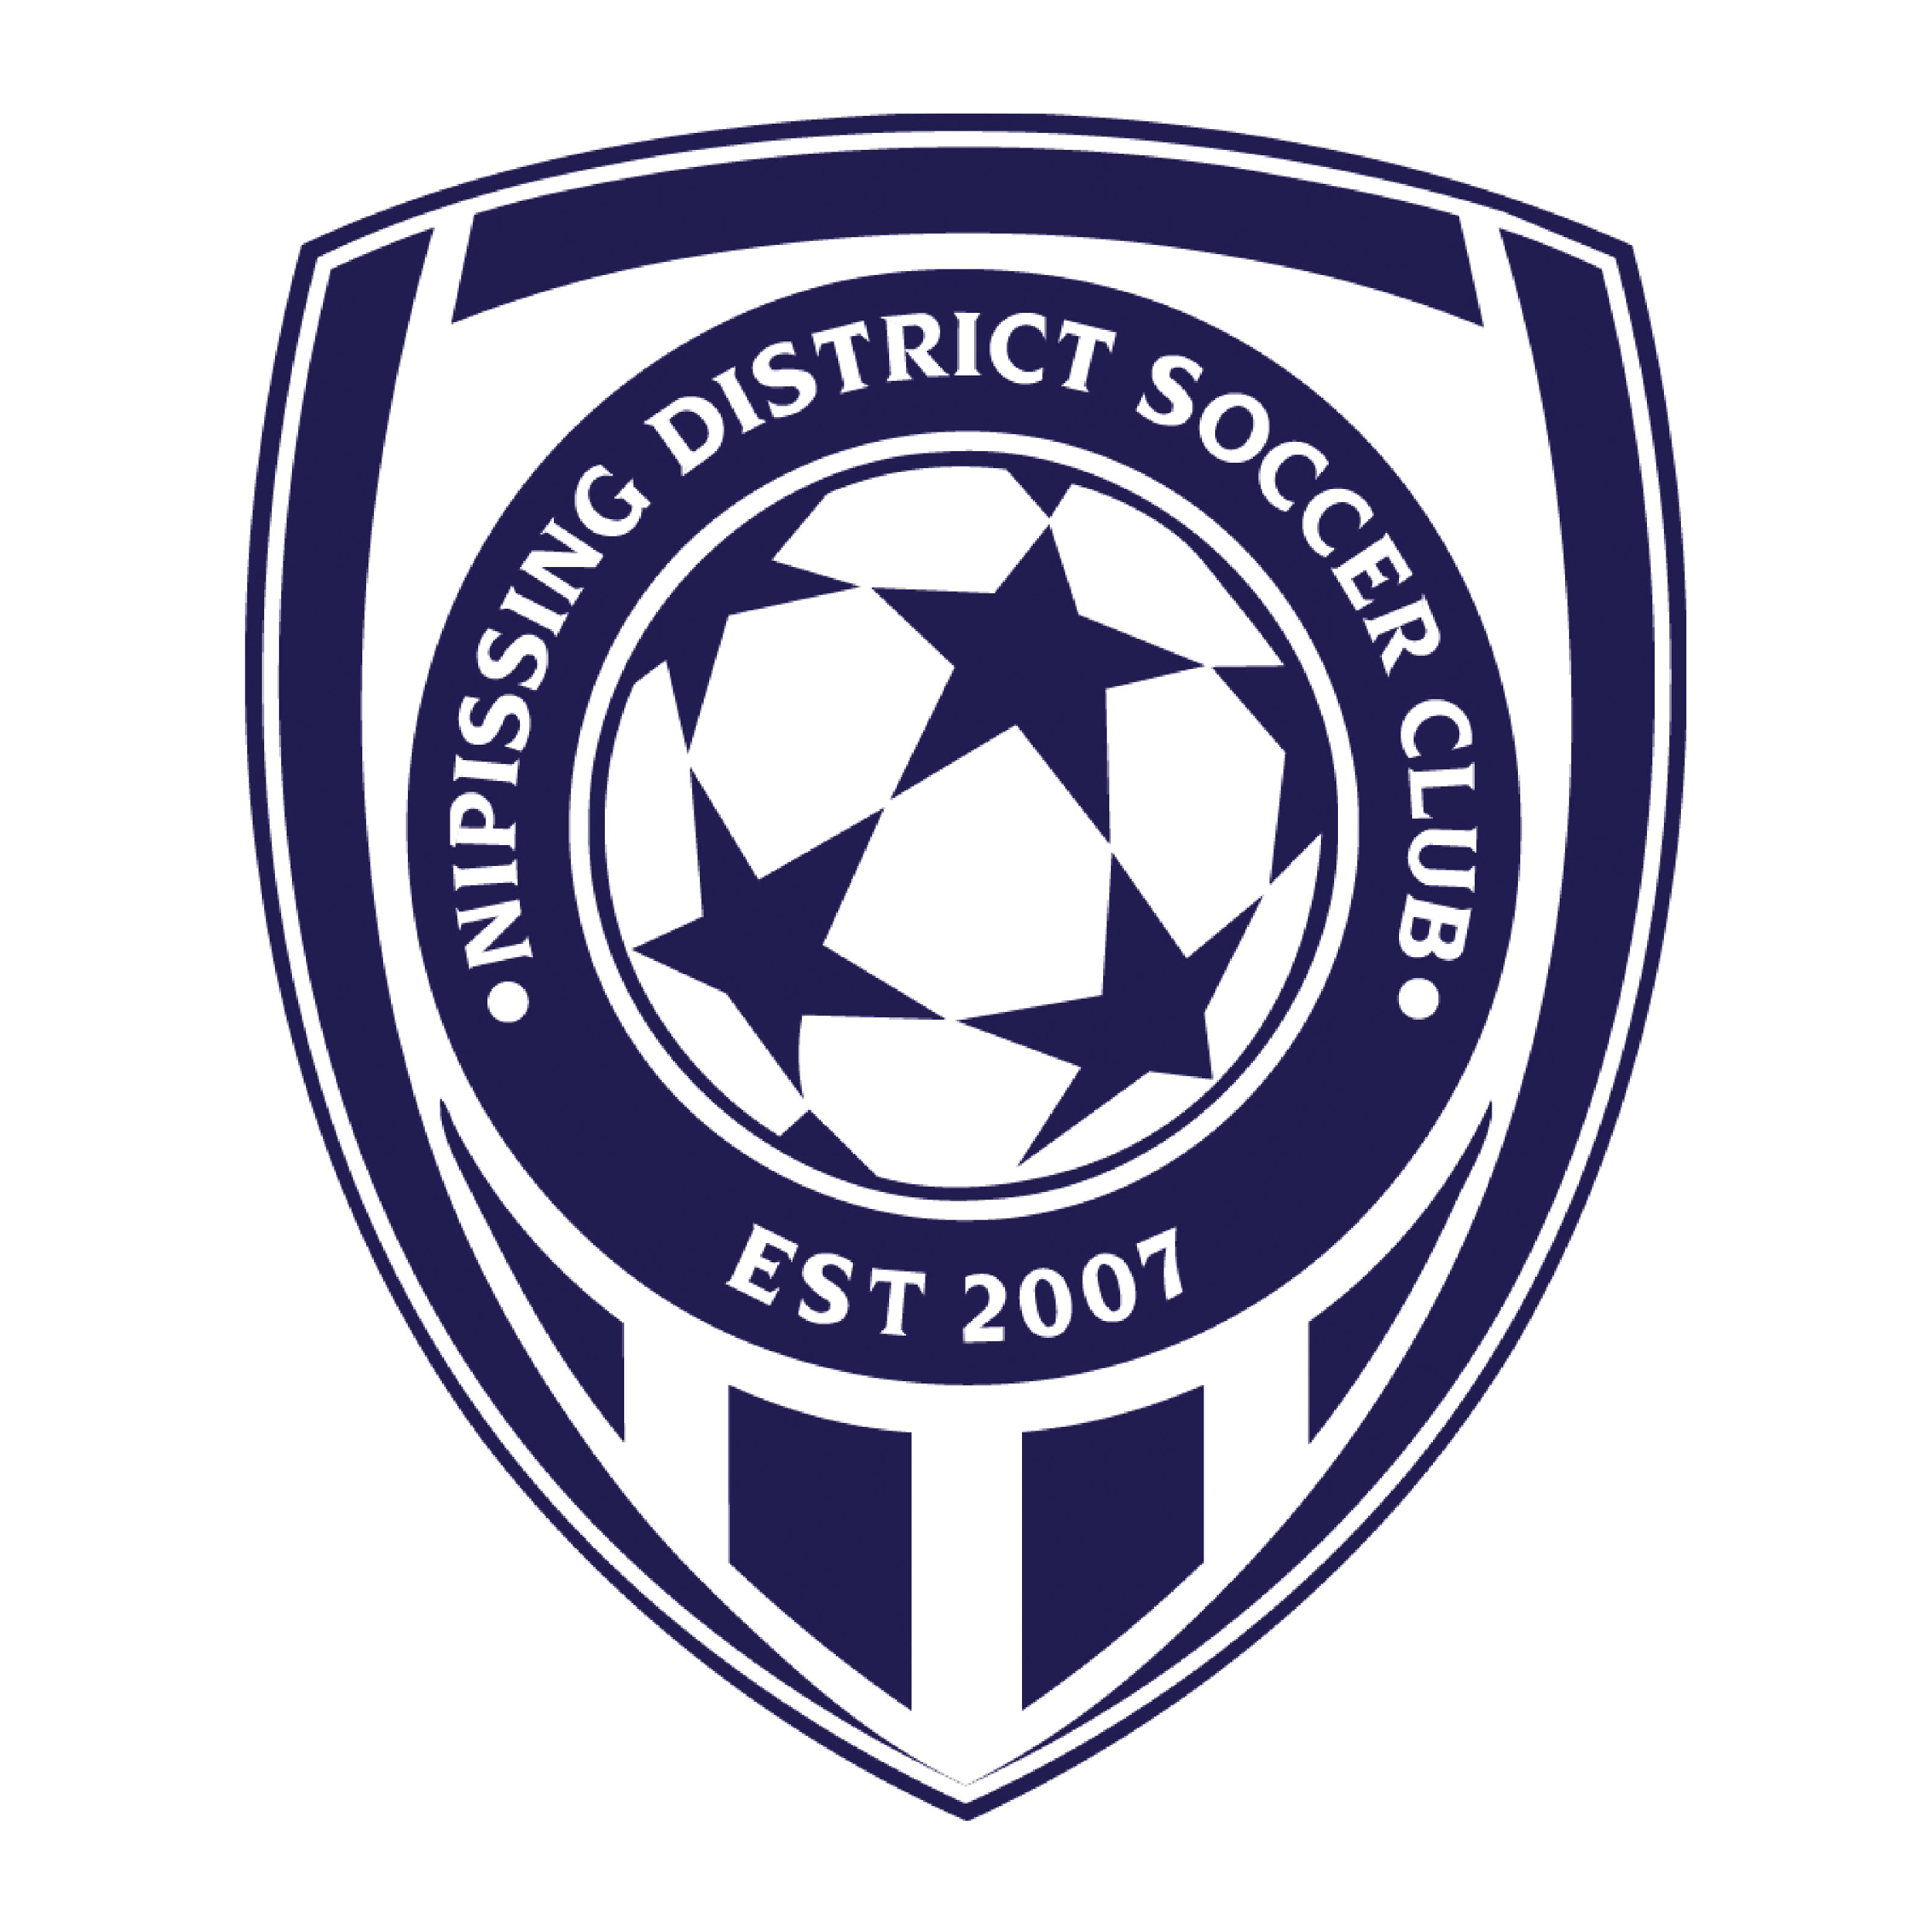 Nipissing District Soccer Club